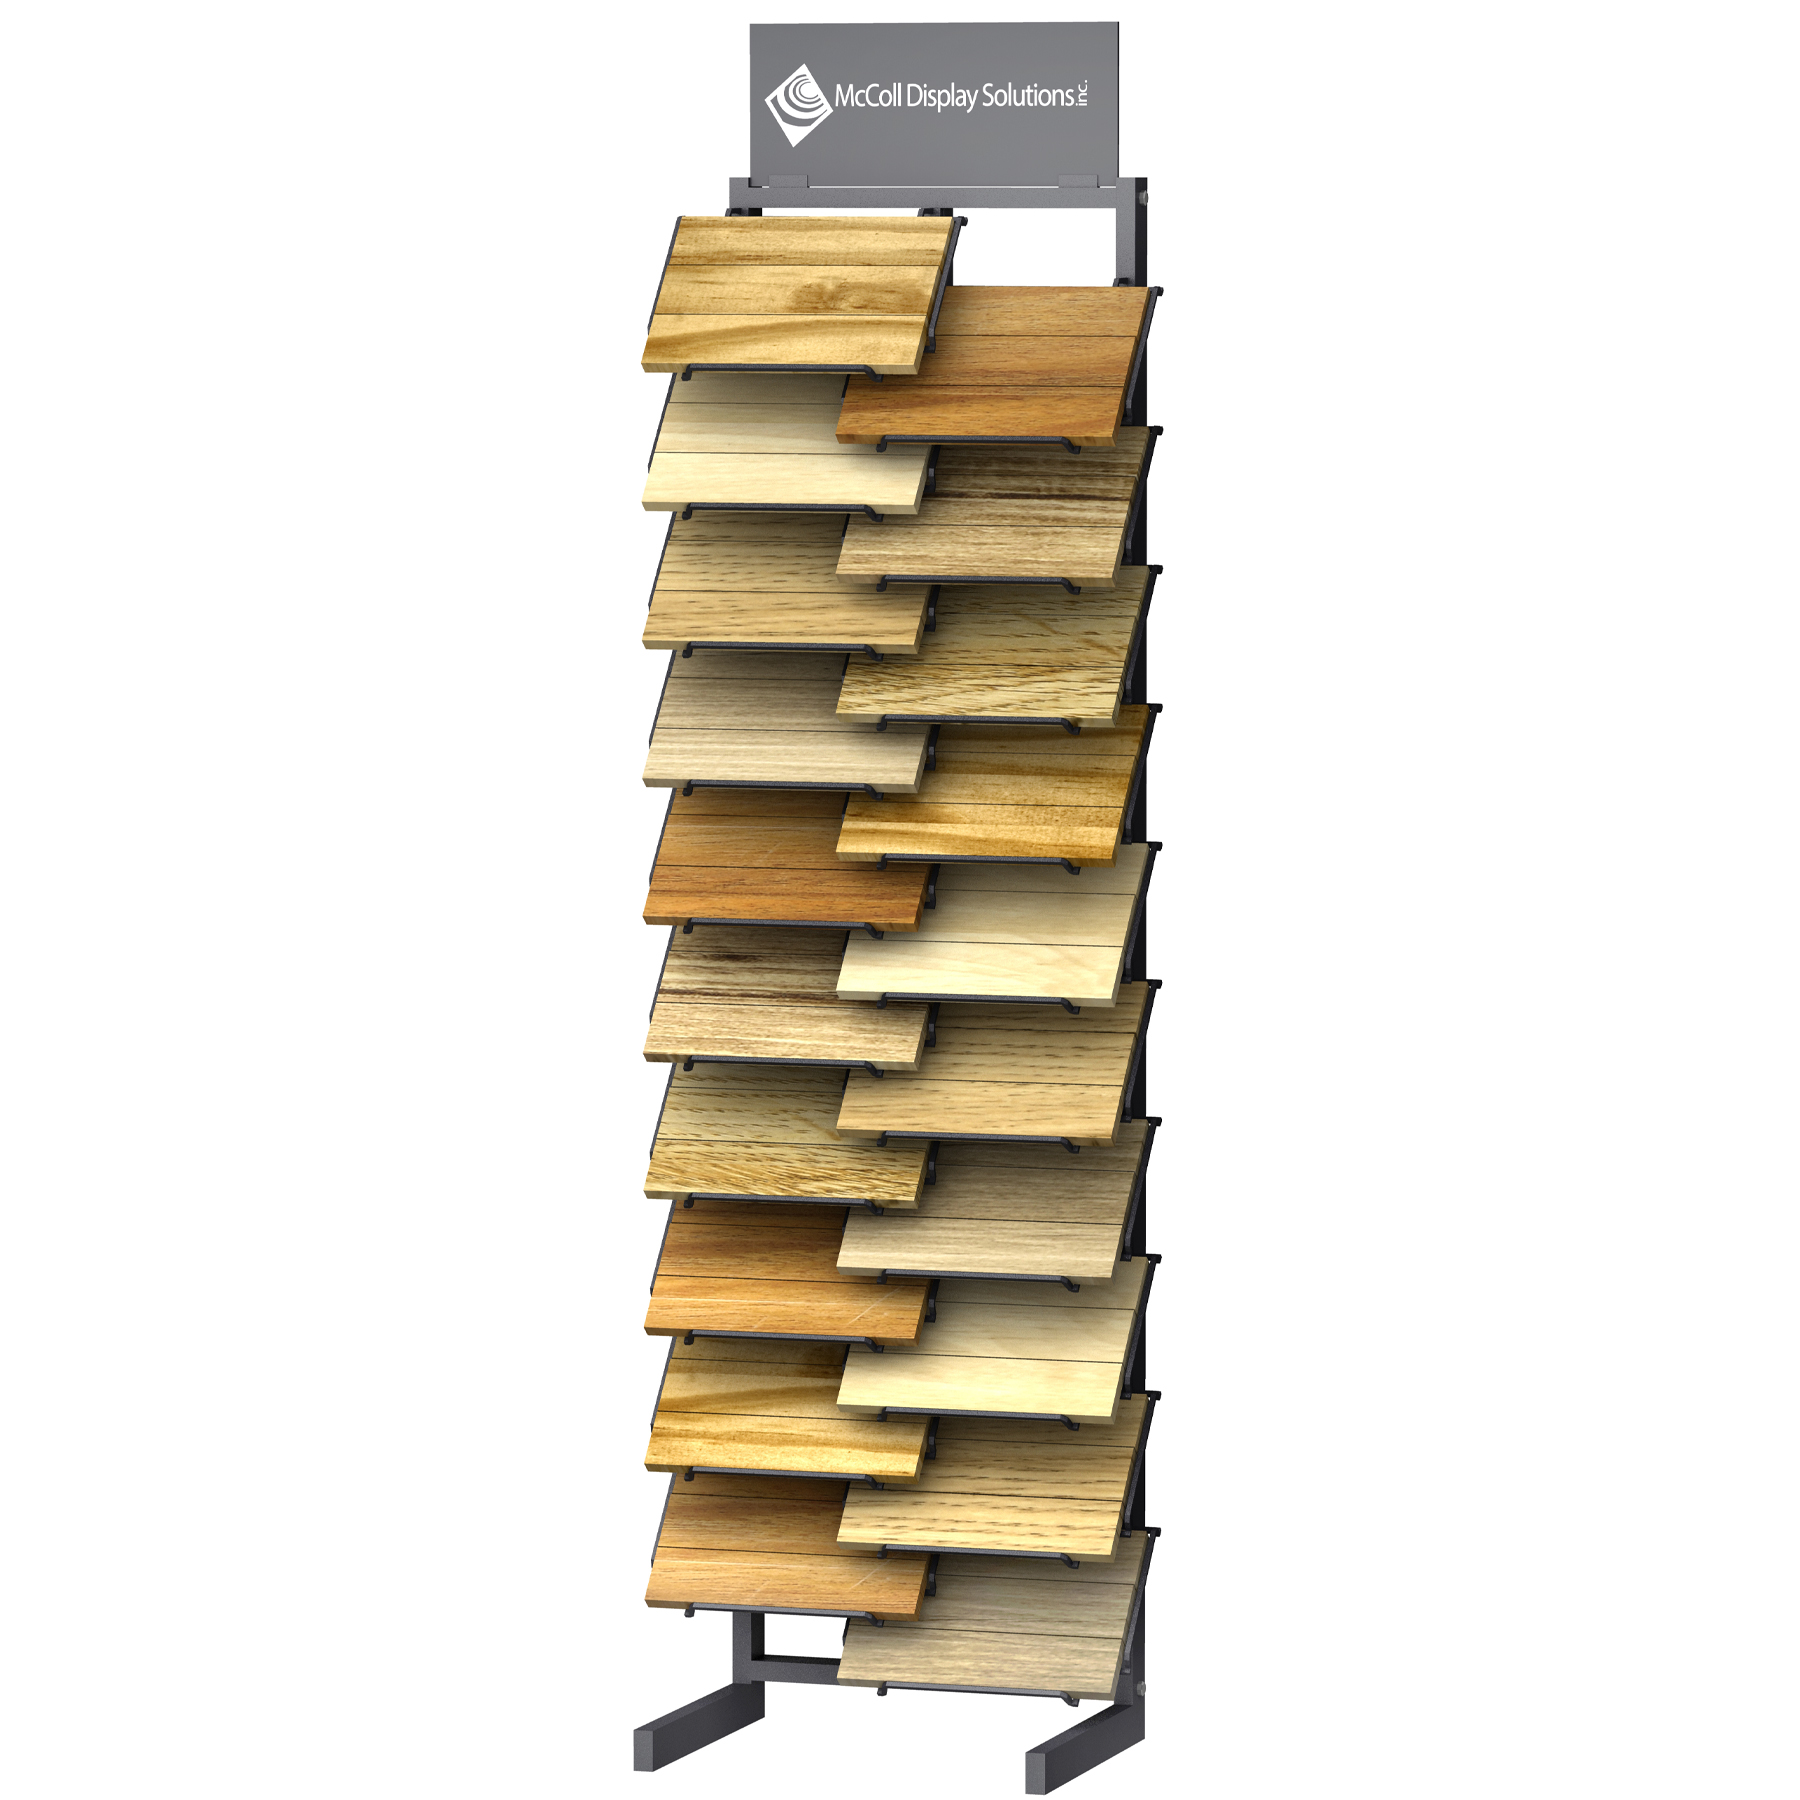 Sturdy Steel Tube Tower Sample Display Wire Shelf System for Hardwood Flooring Planks